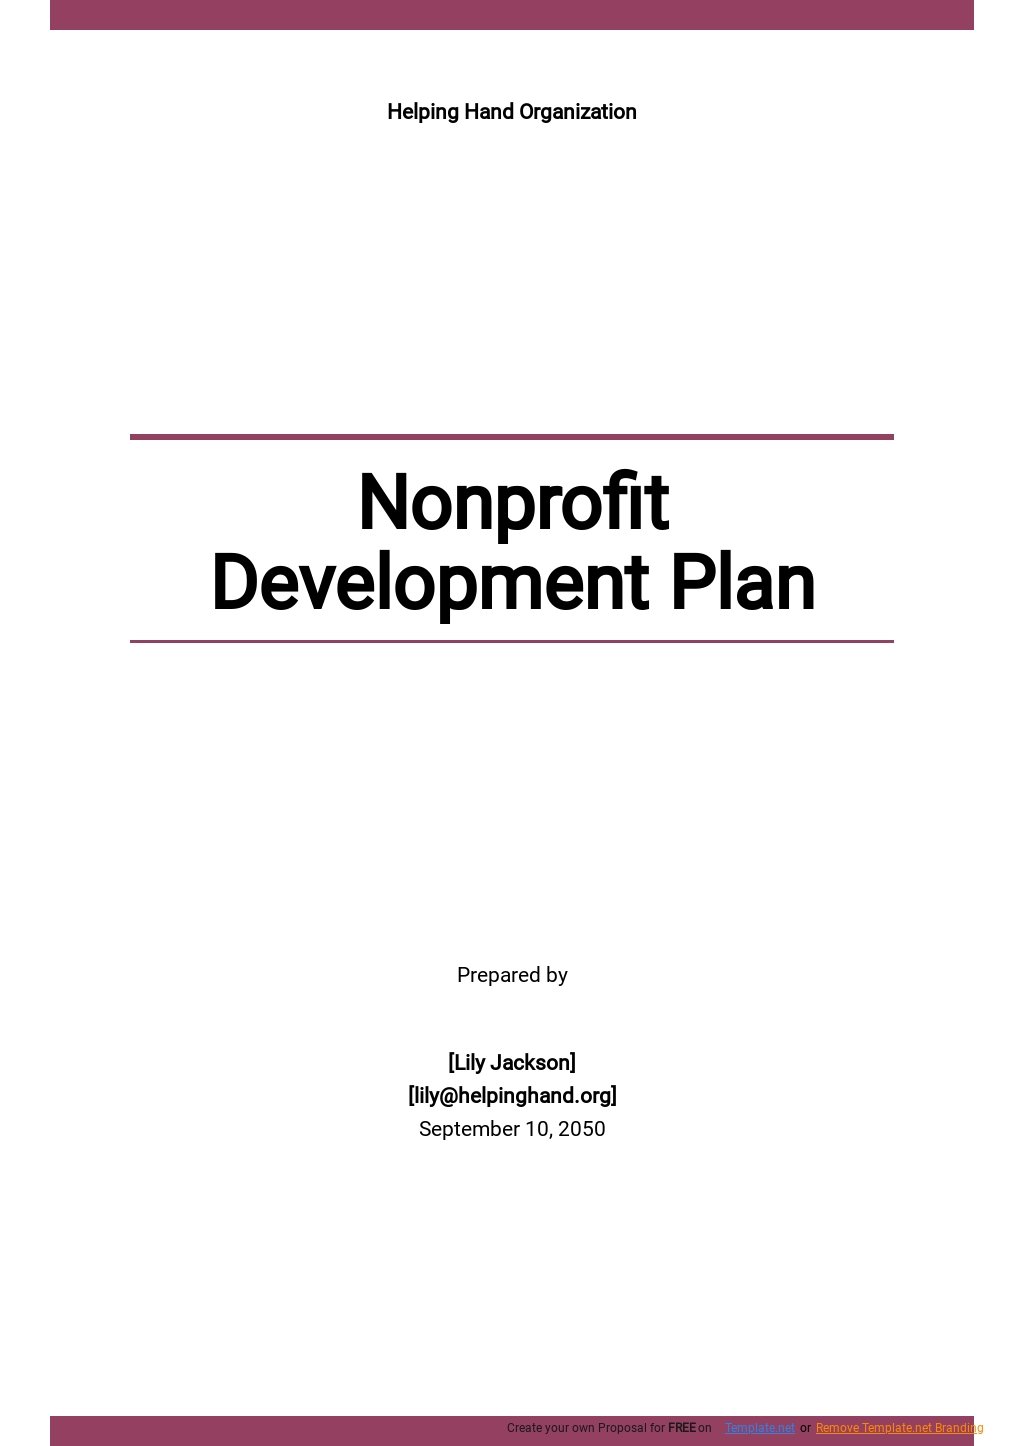 Short Nonprofit Development Plan Template .jpe